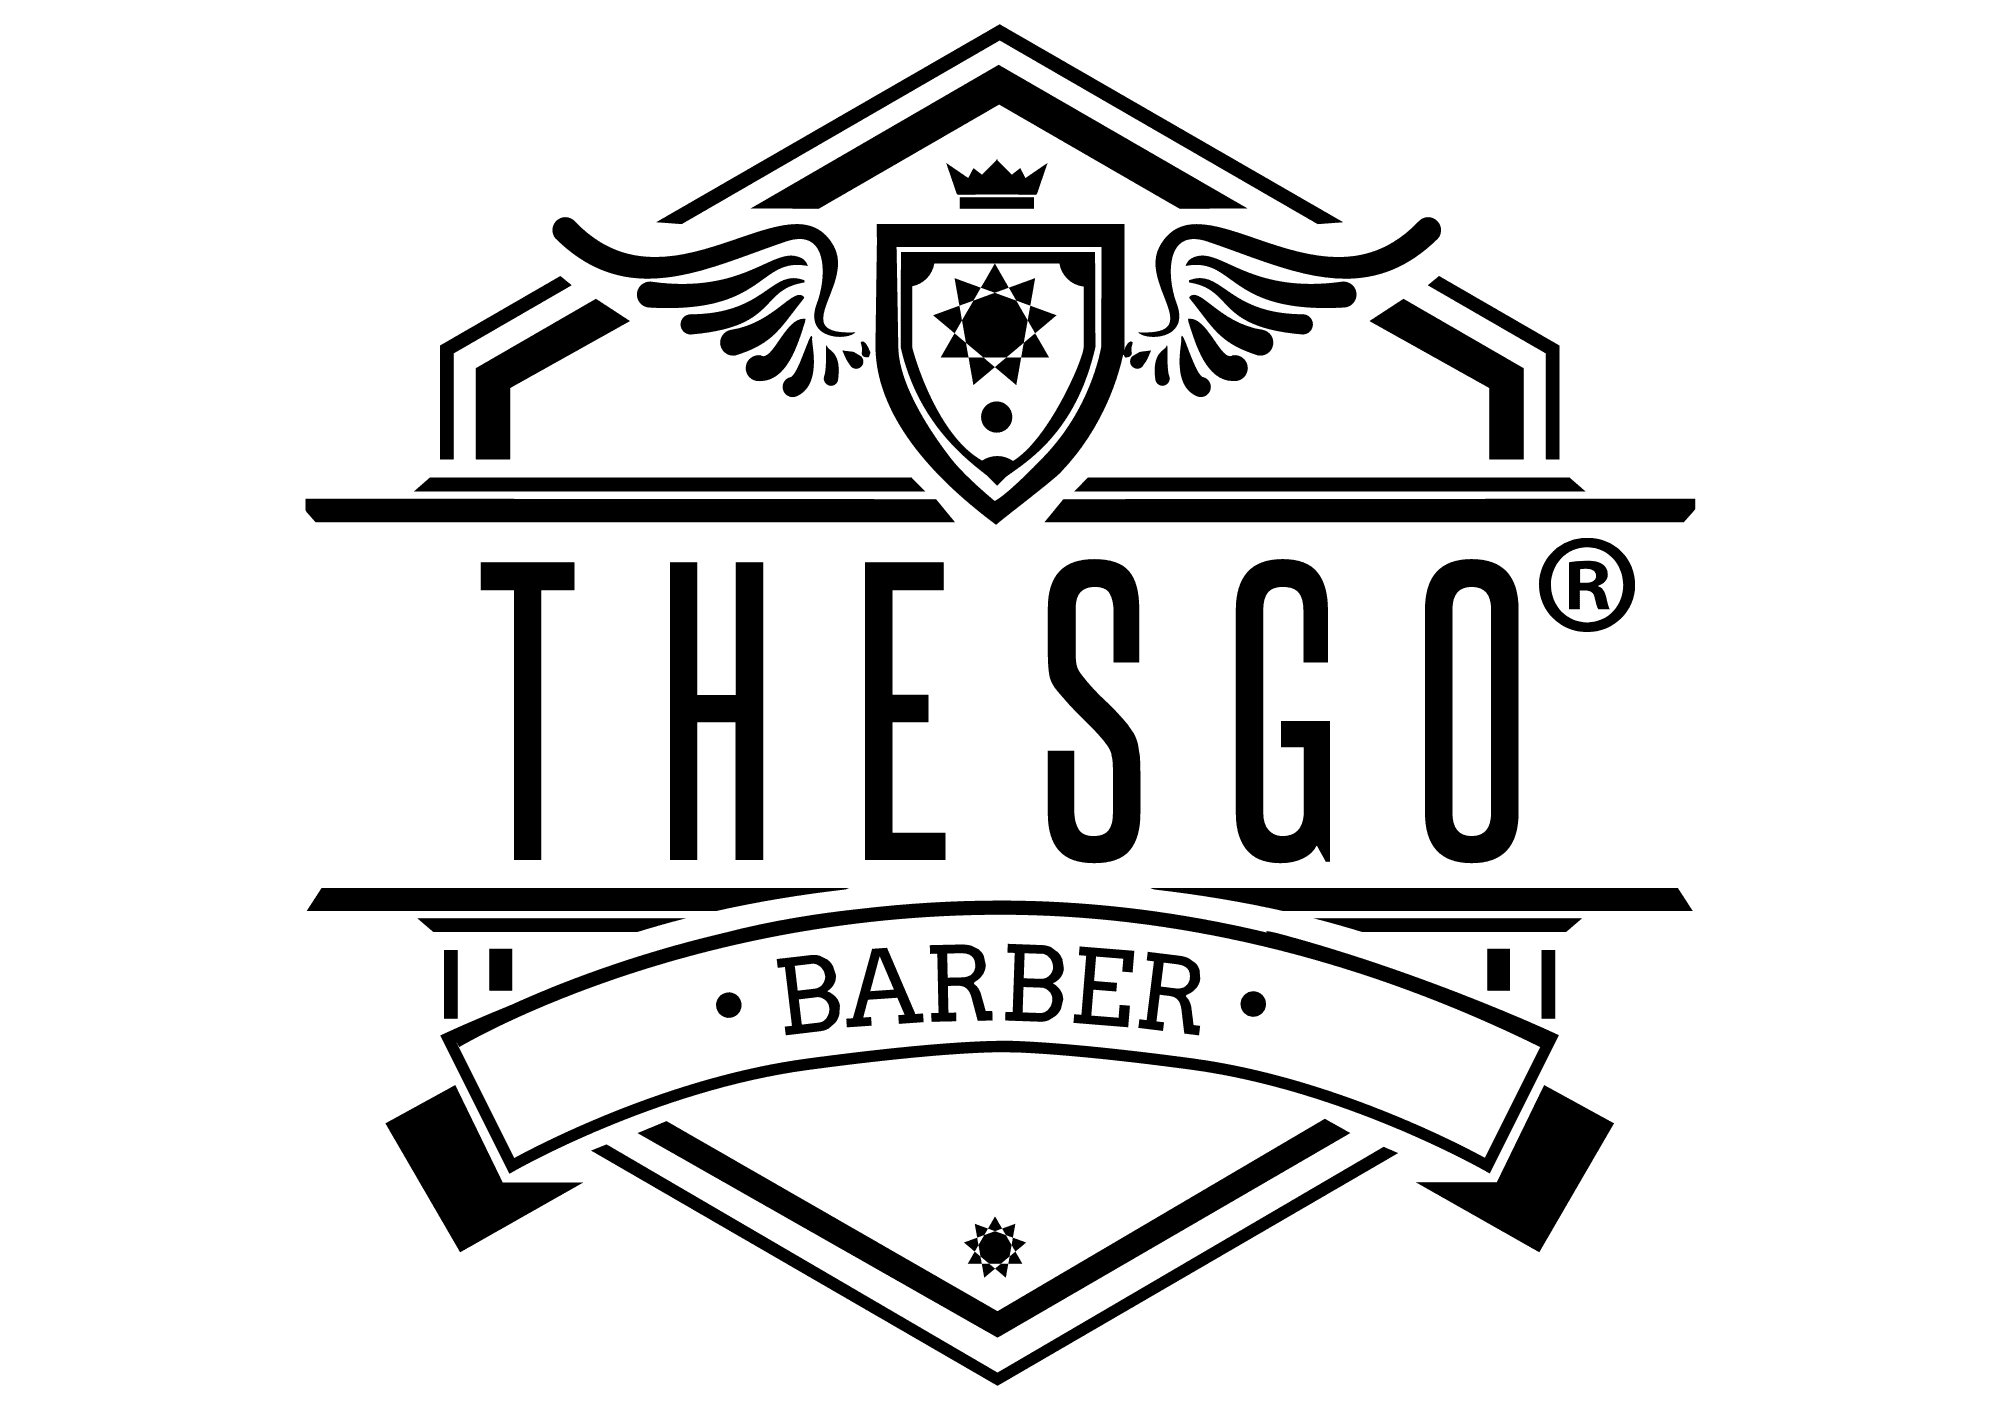 logo-barber-cosmeticospdf-1-1